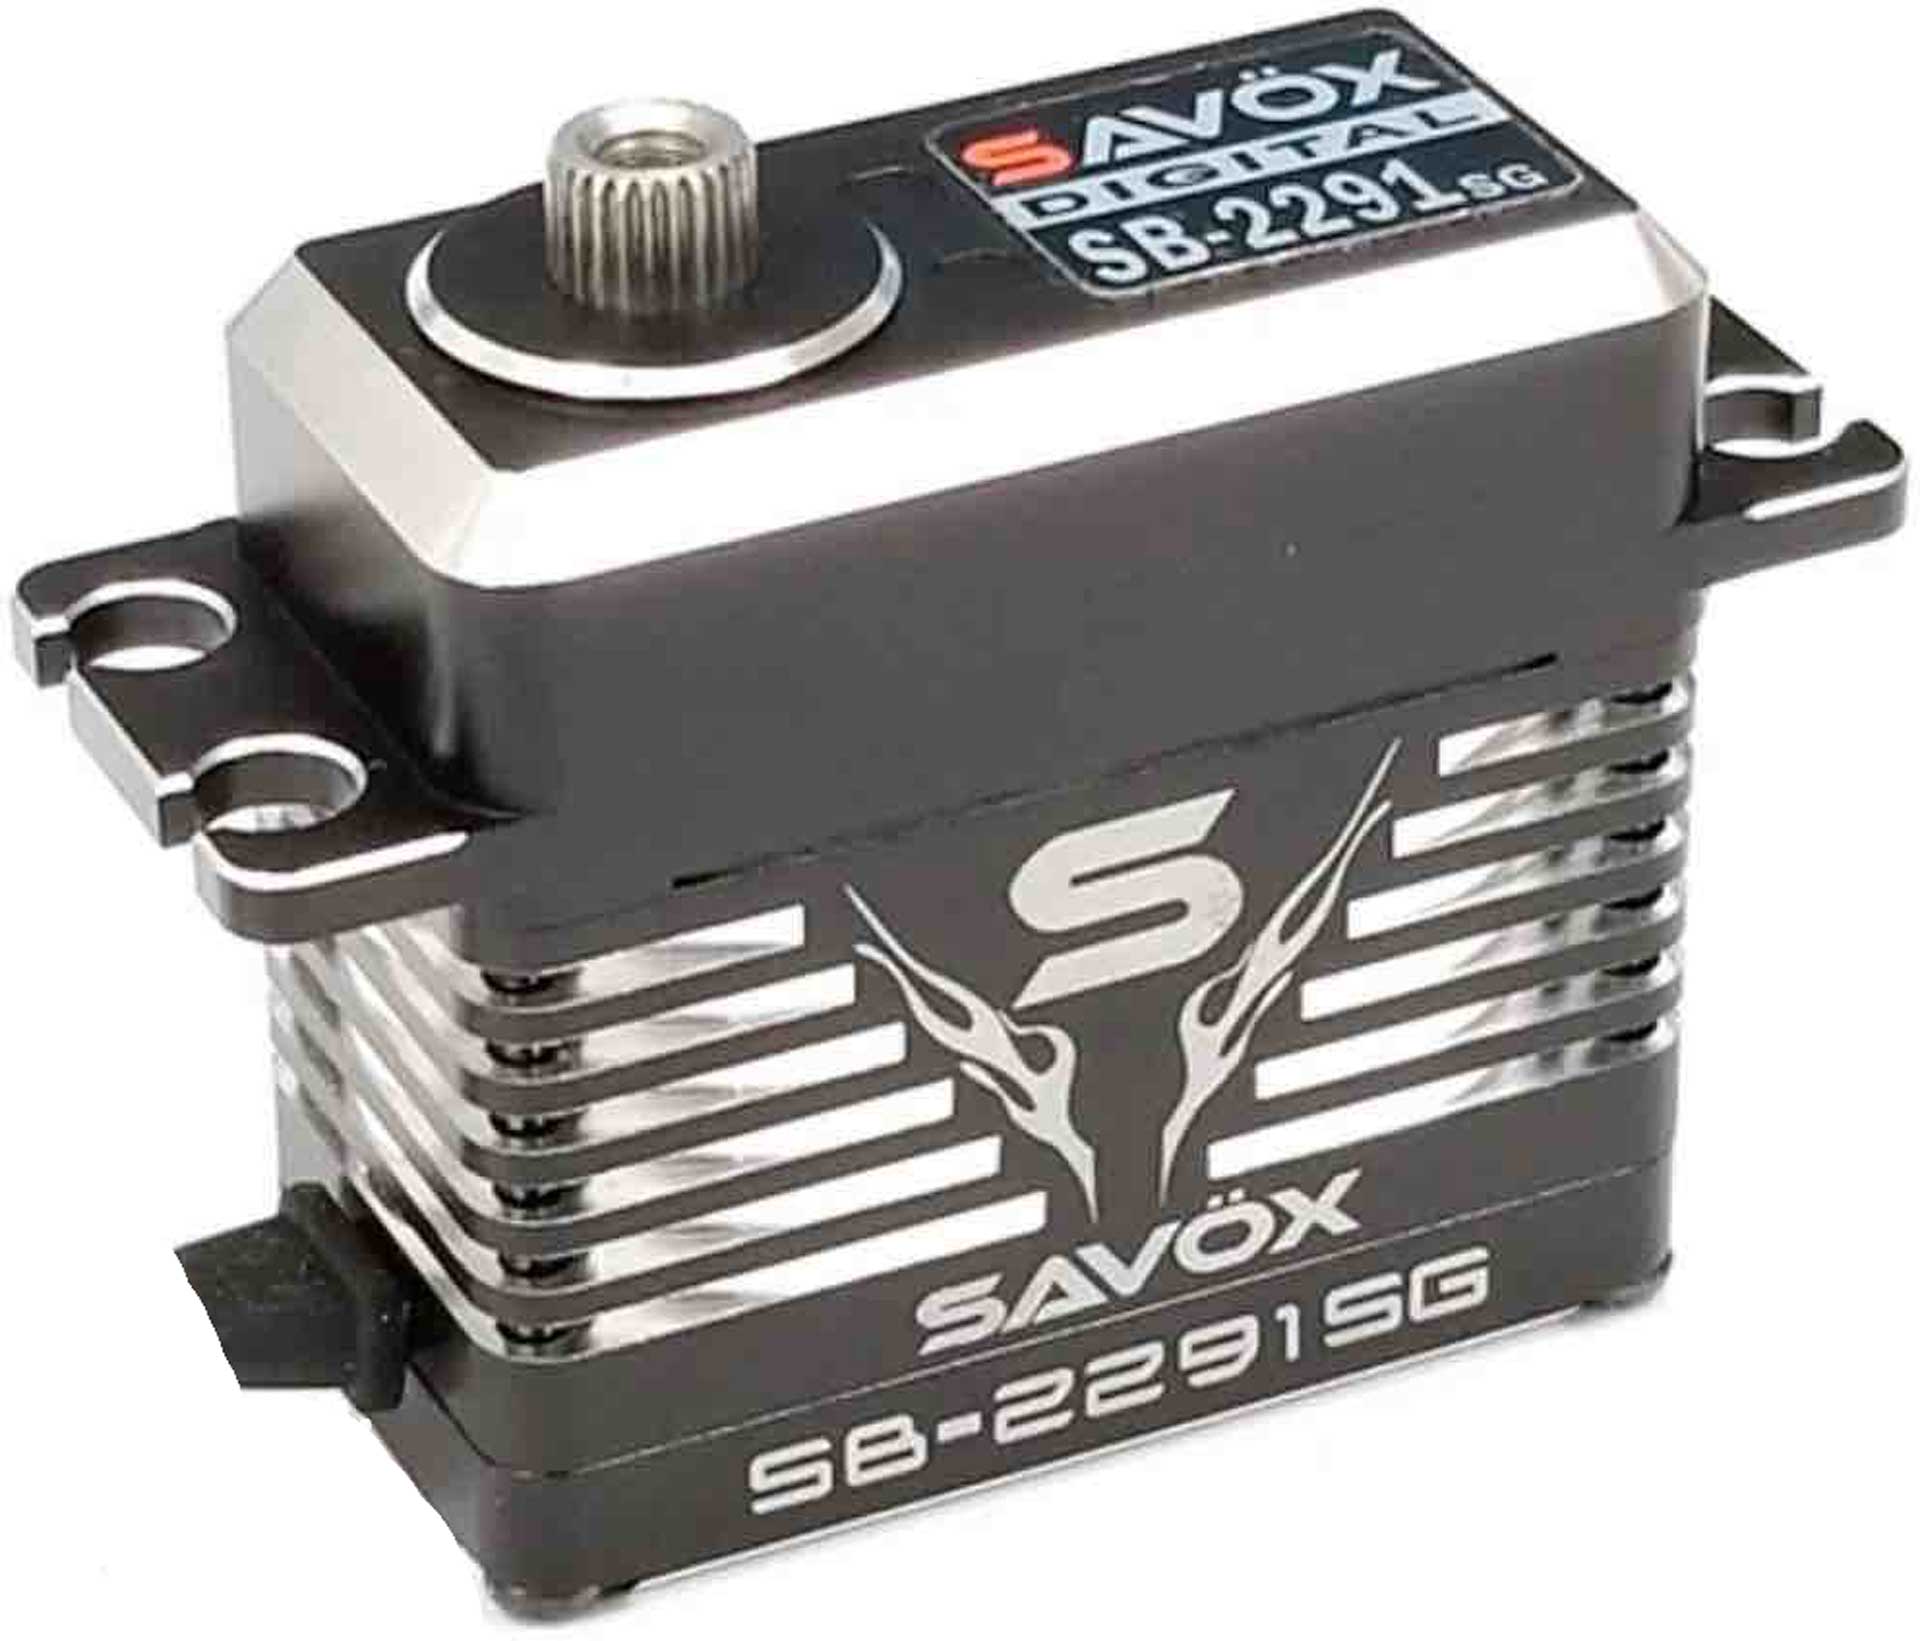 SAVÖX SB-2291SG (8,4V/25KG/0,042s) BRUSHLESS DIGITAL HV SERVO BLACK LINE